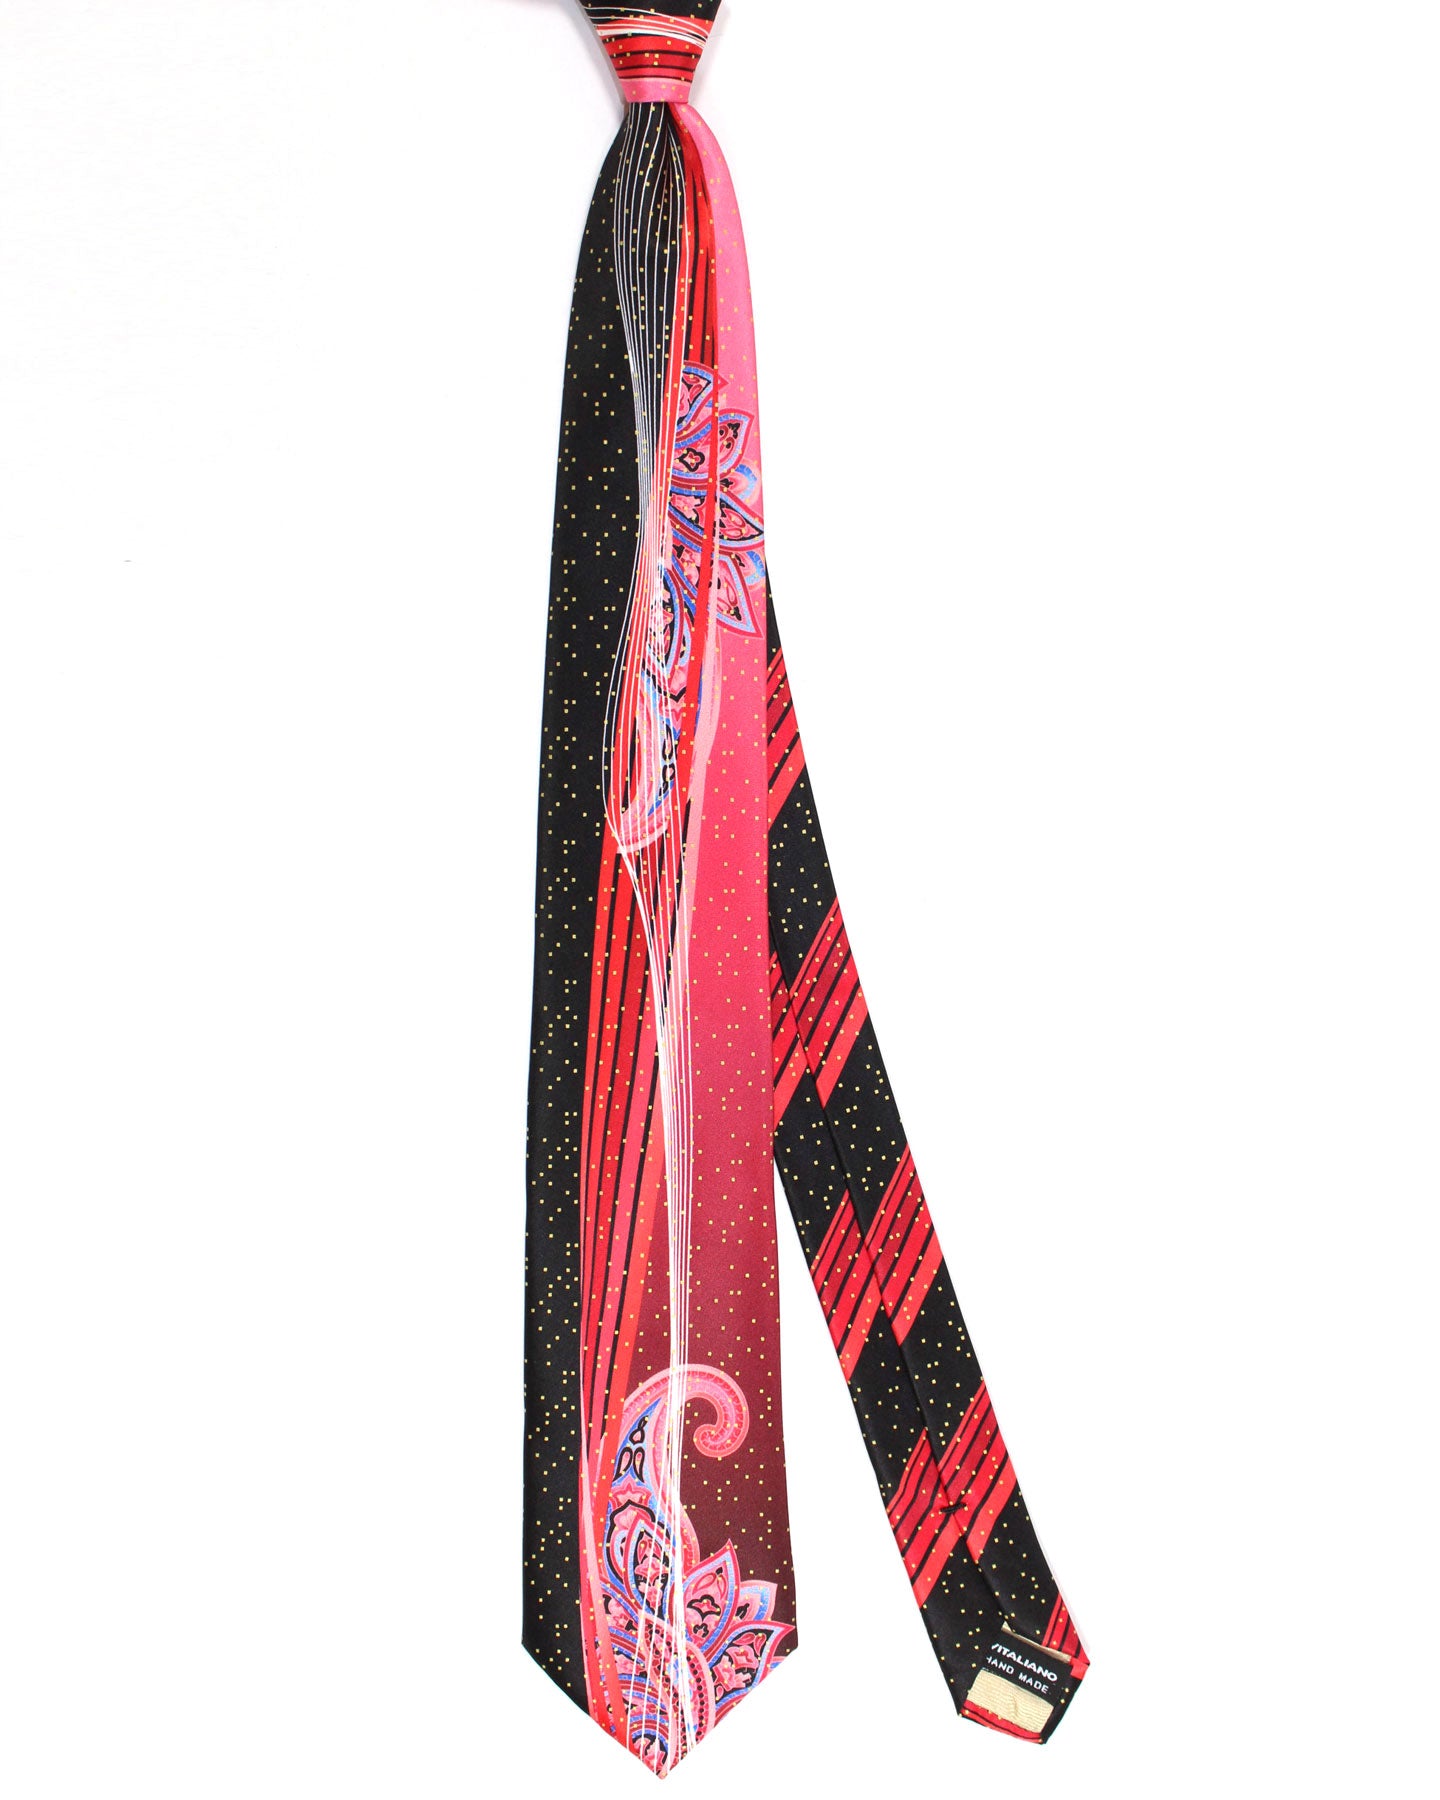 Vitaliano Pancaldi Silk Tie Red Black Swirl Paisley Design